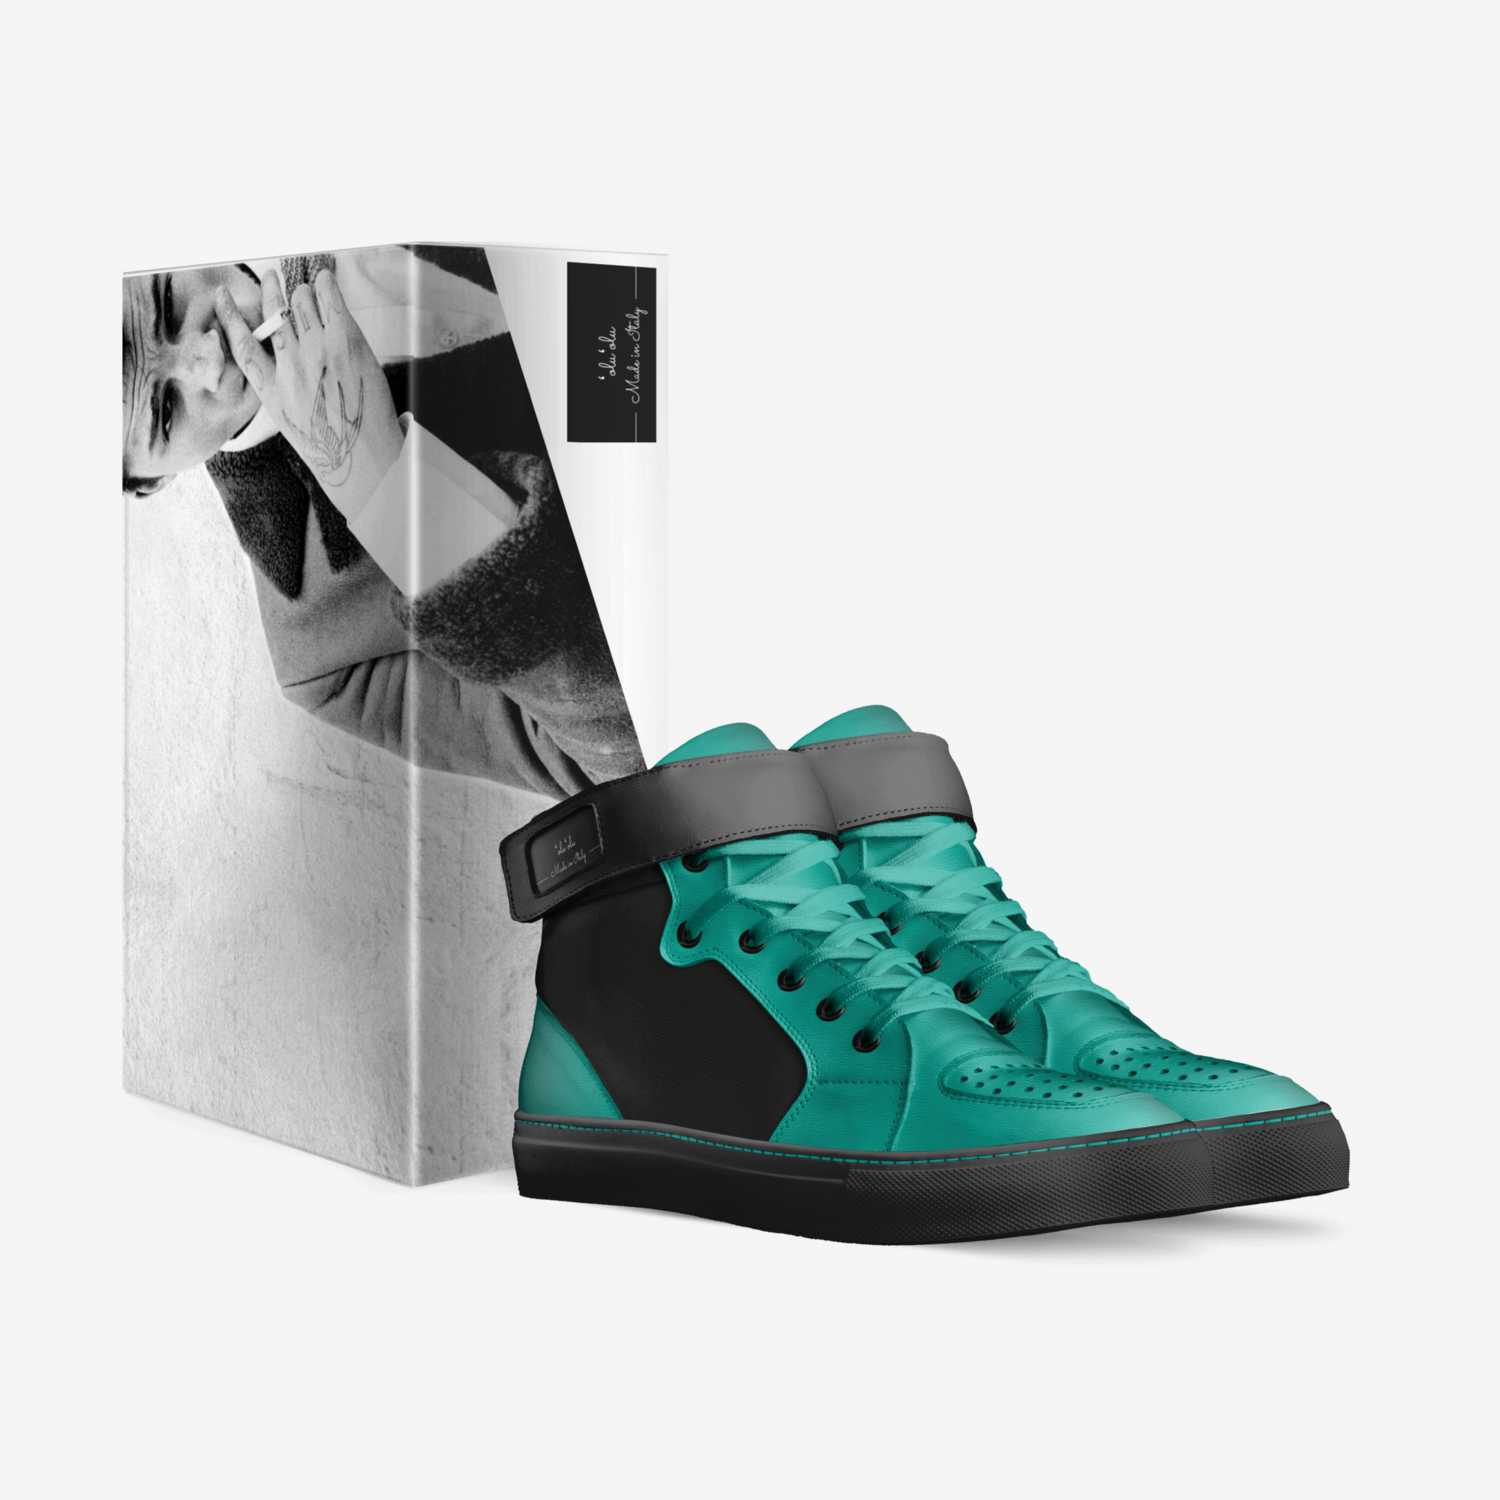 ʻoluʻolu custom made in Italy shoes by Samantha | Box view